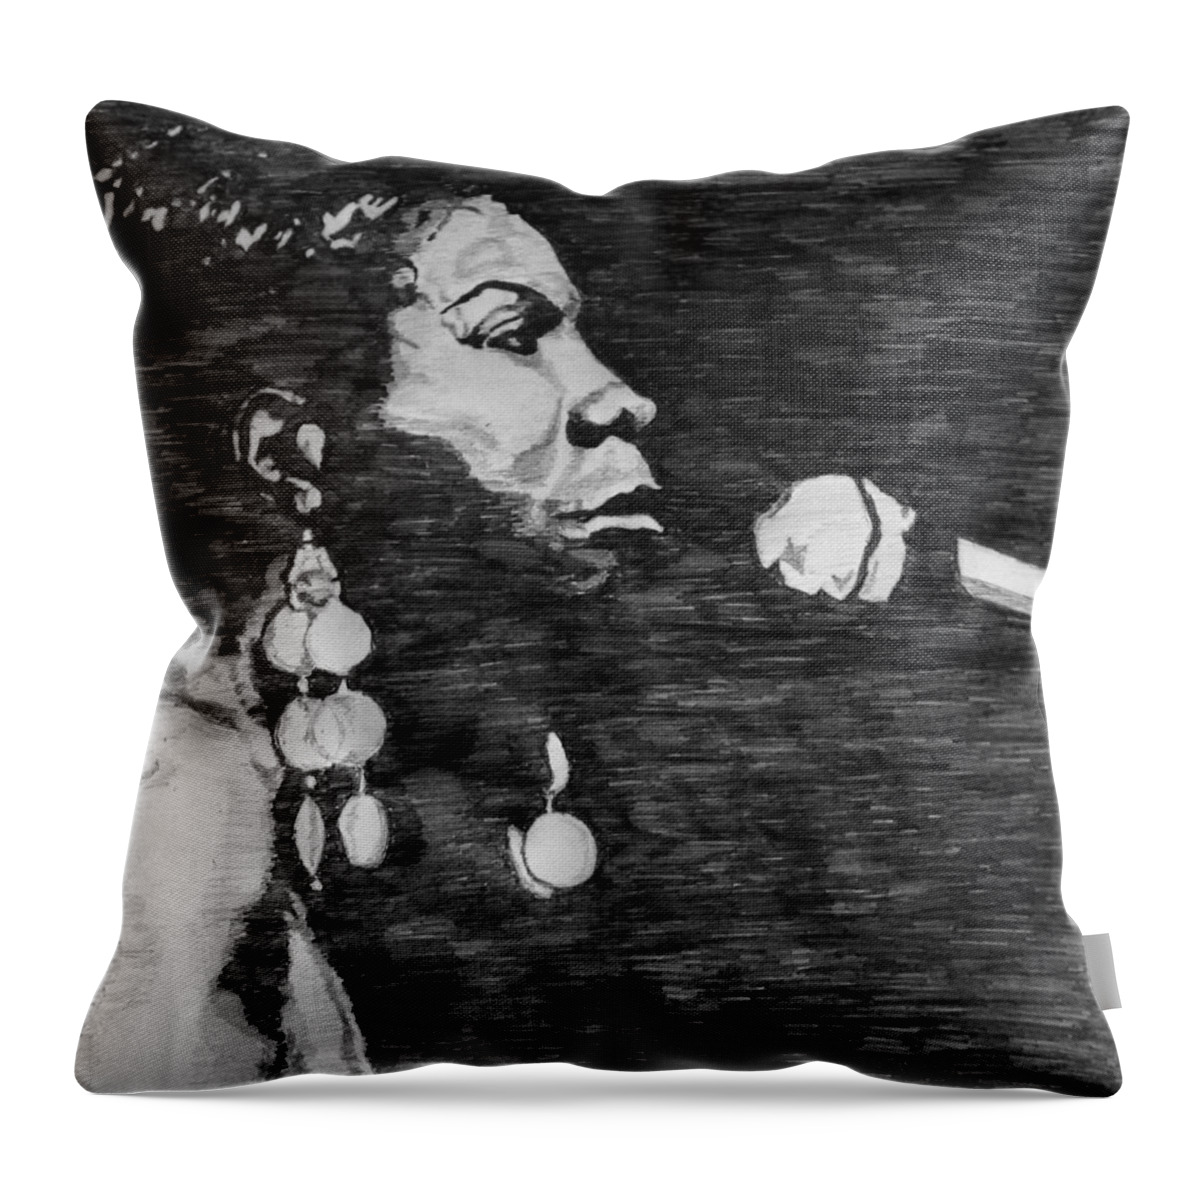 Nina Simone Throw Pillow featuring the drawing Nina Simone by Rachel Natalie Rawlins